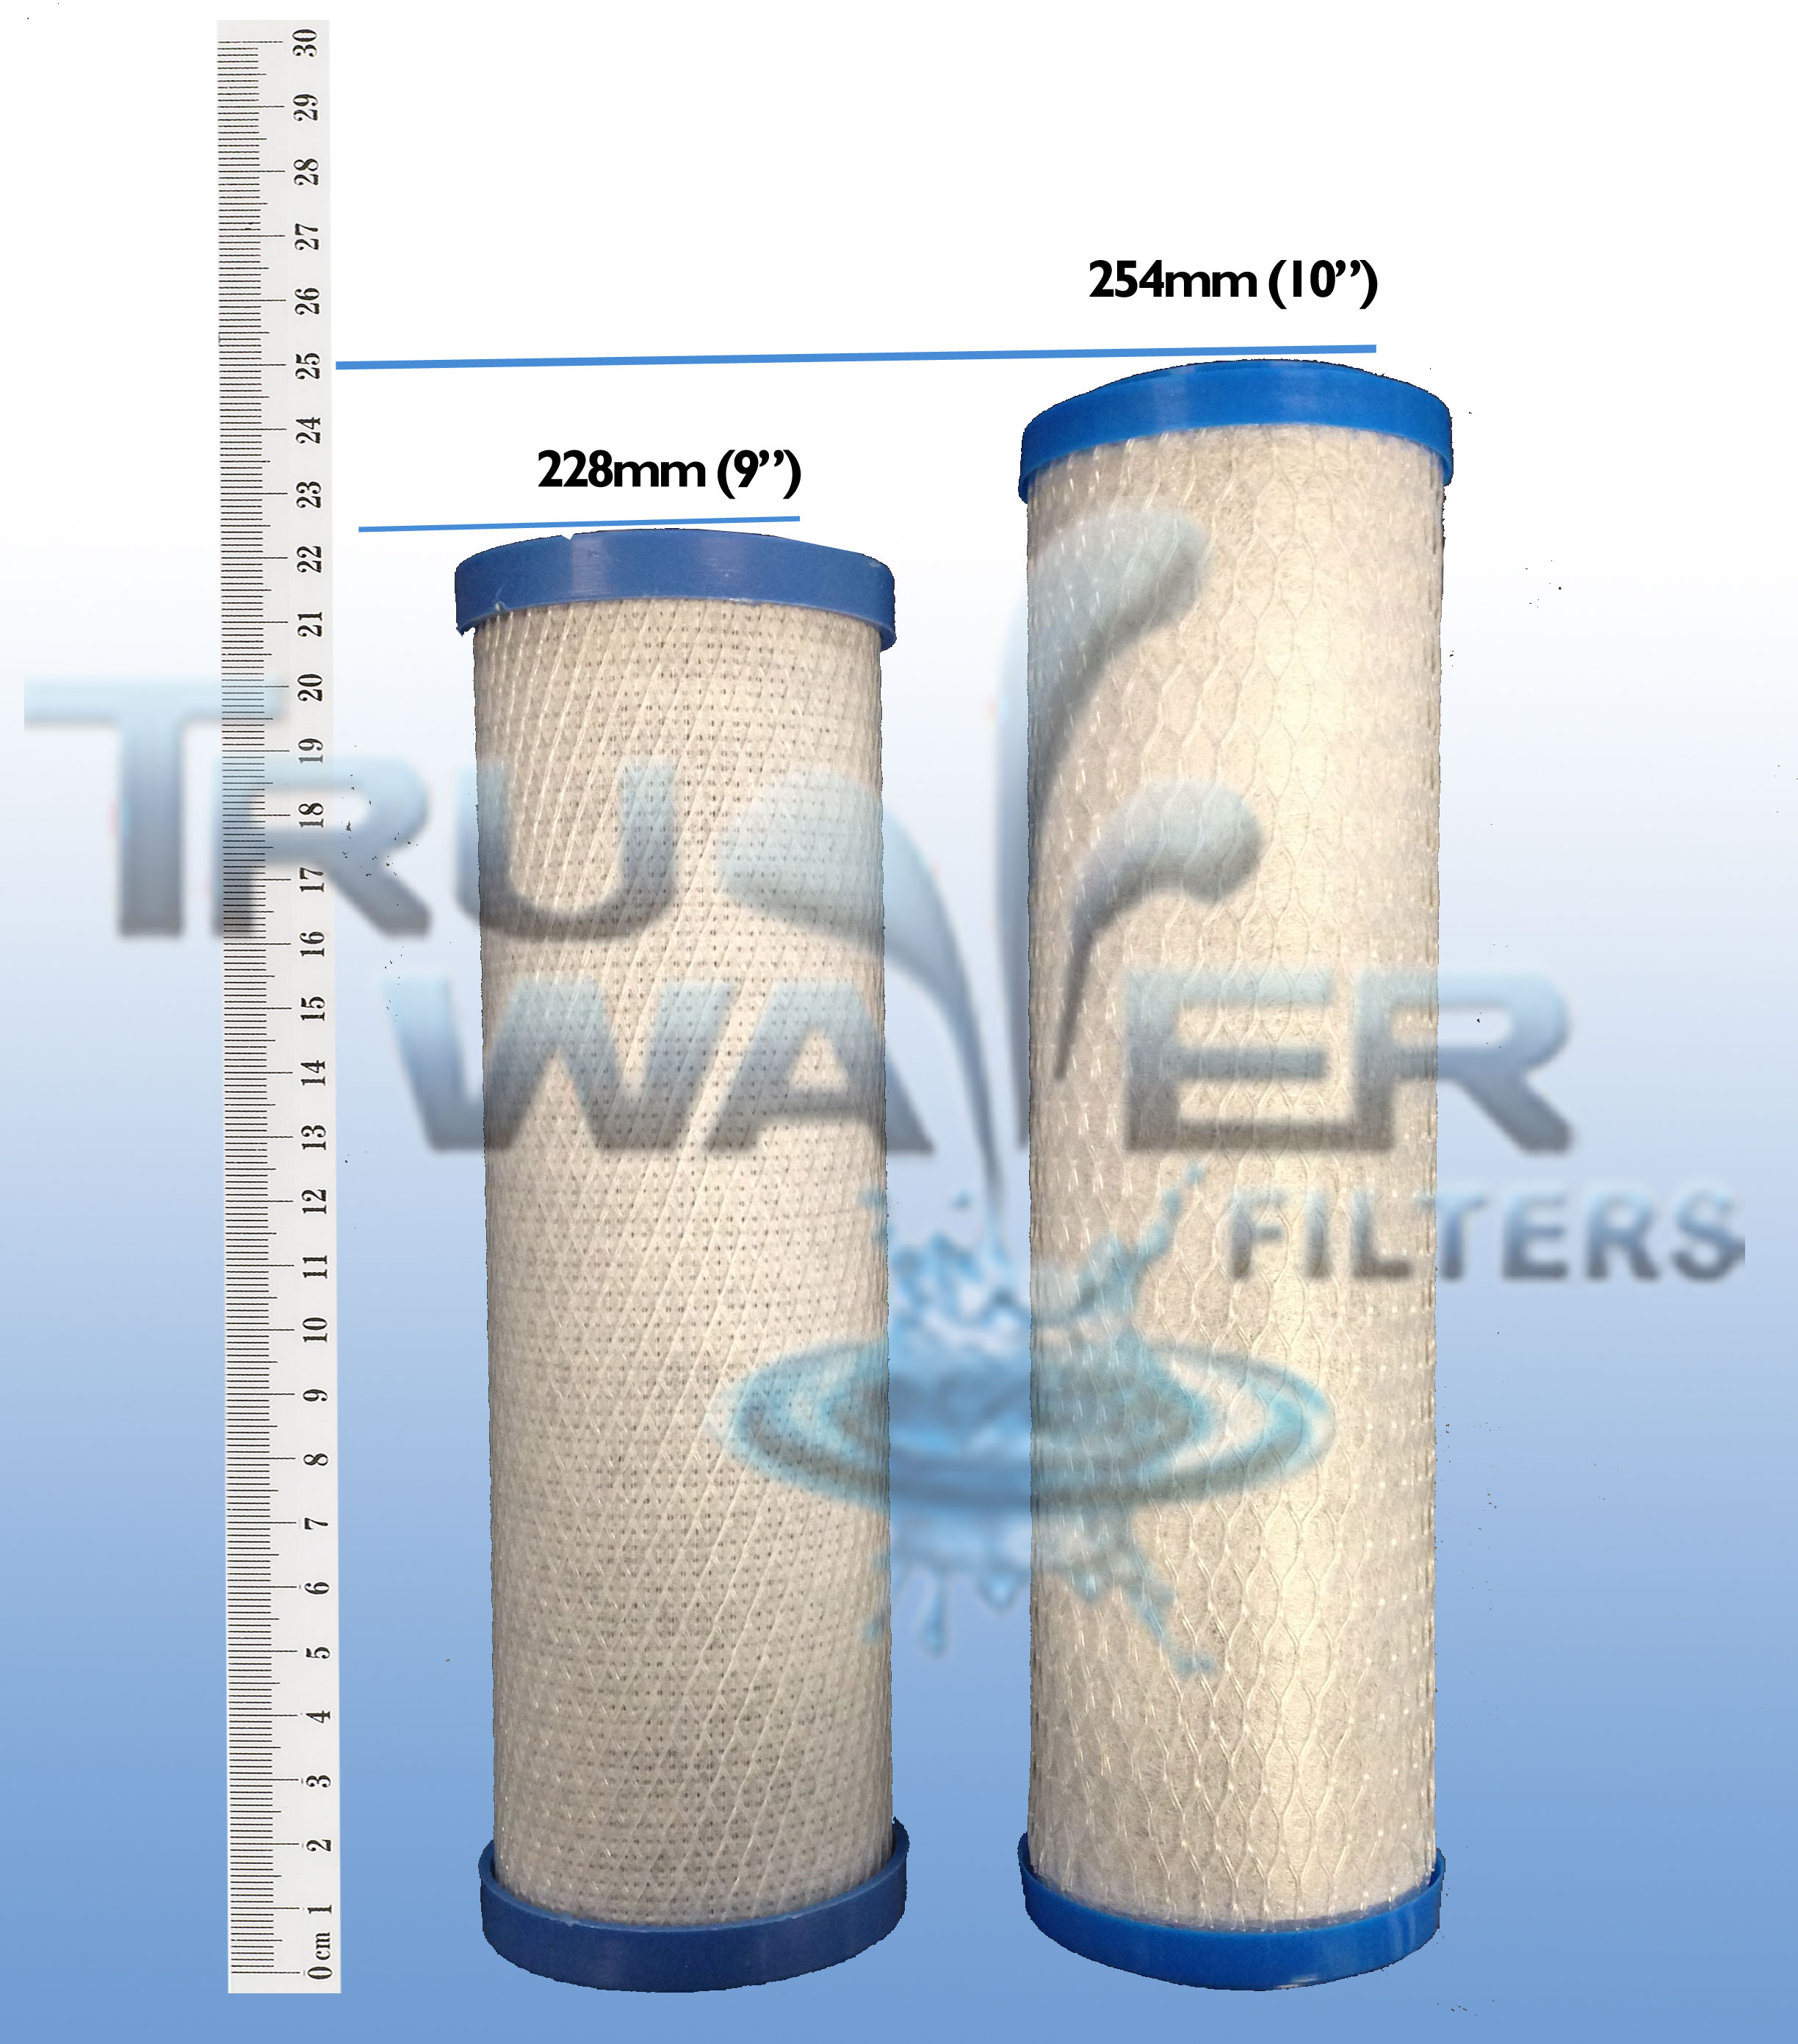 9 inch Water Filter comparison